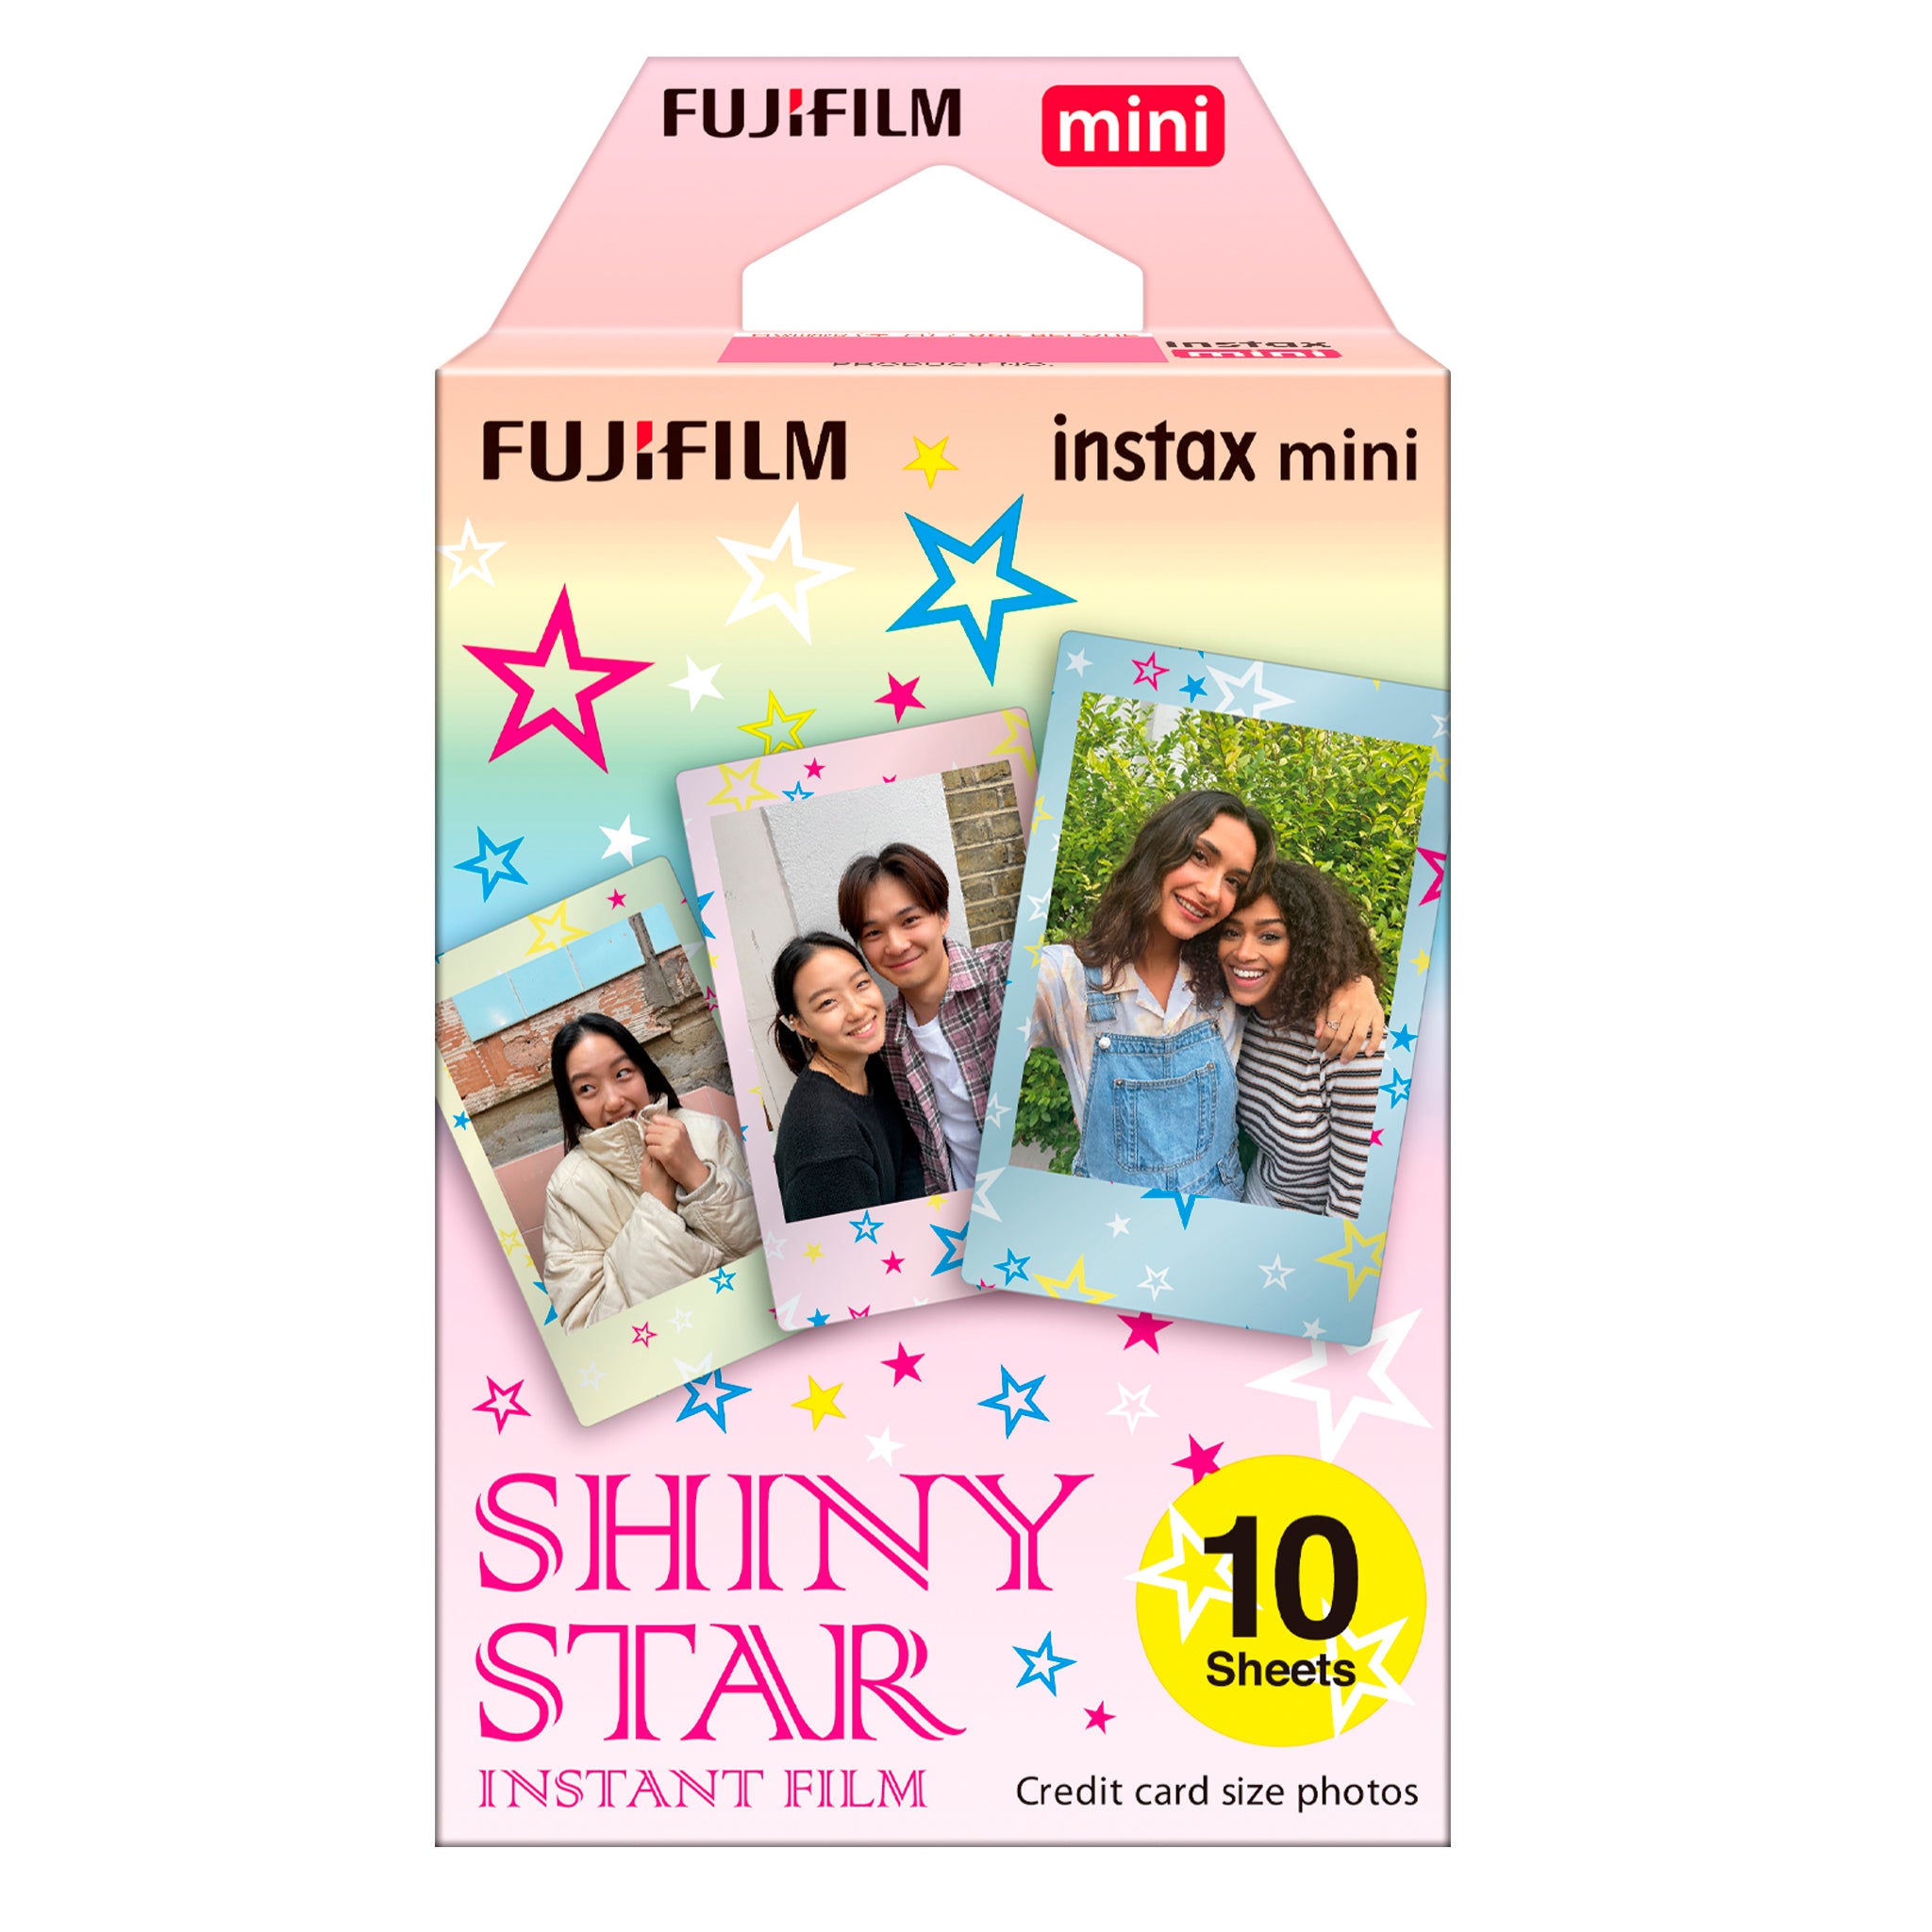 Fujifilm Instax Mini Film (Shiny Star)